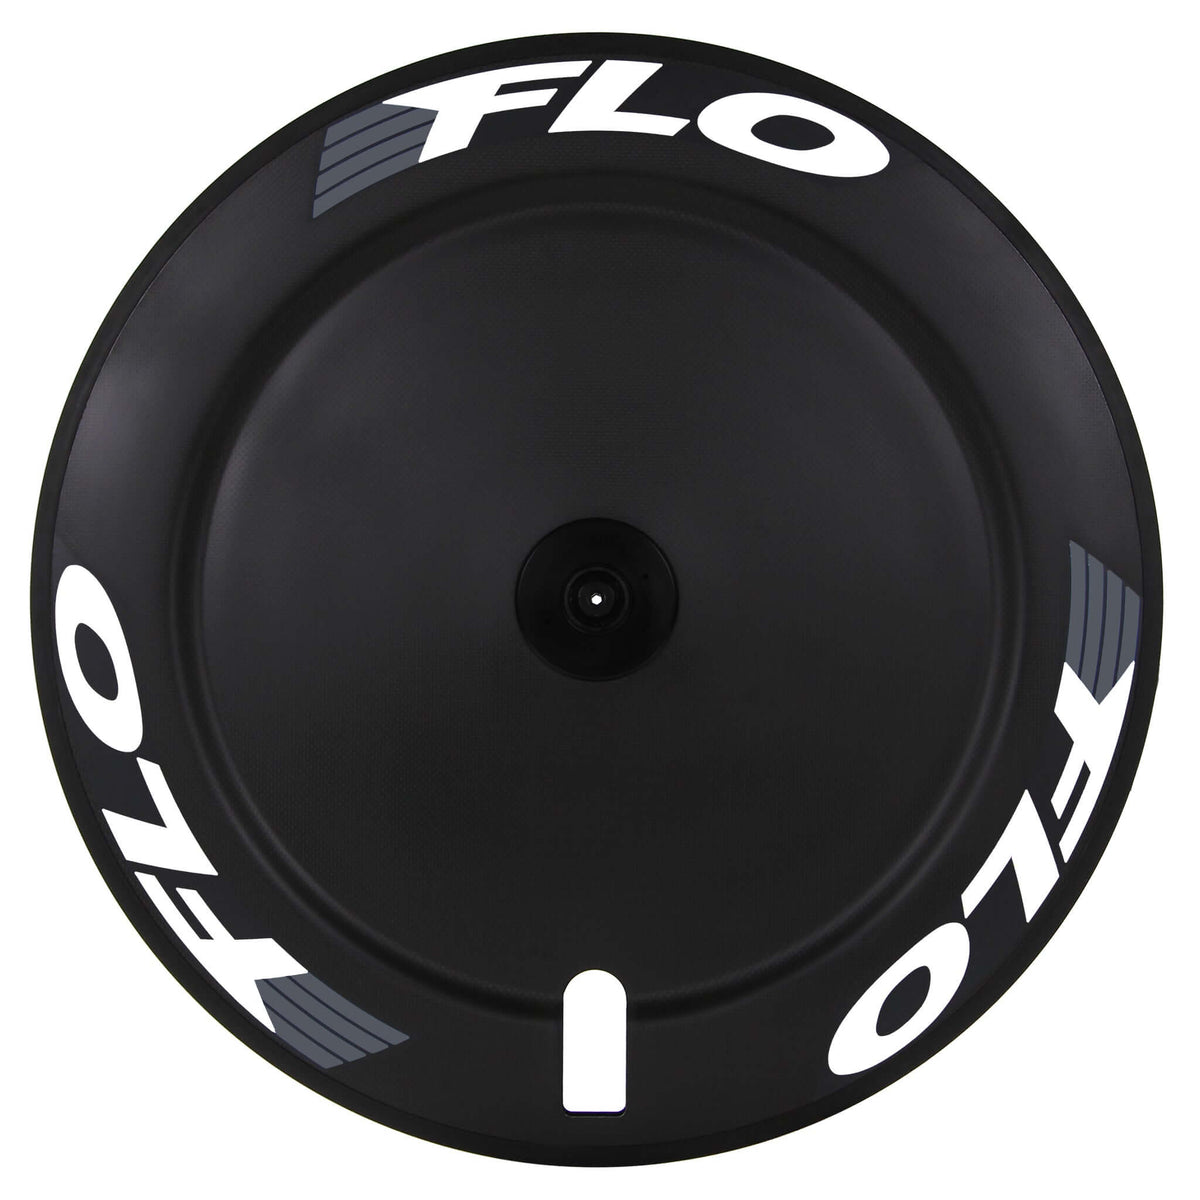 FLO DISC Carbon Clincher - Our Fastest Carbon Wheel A to B